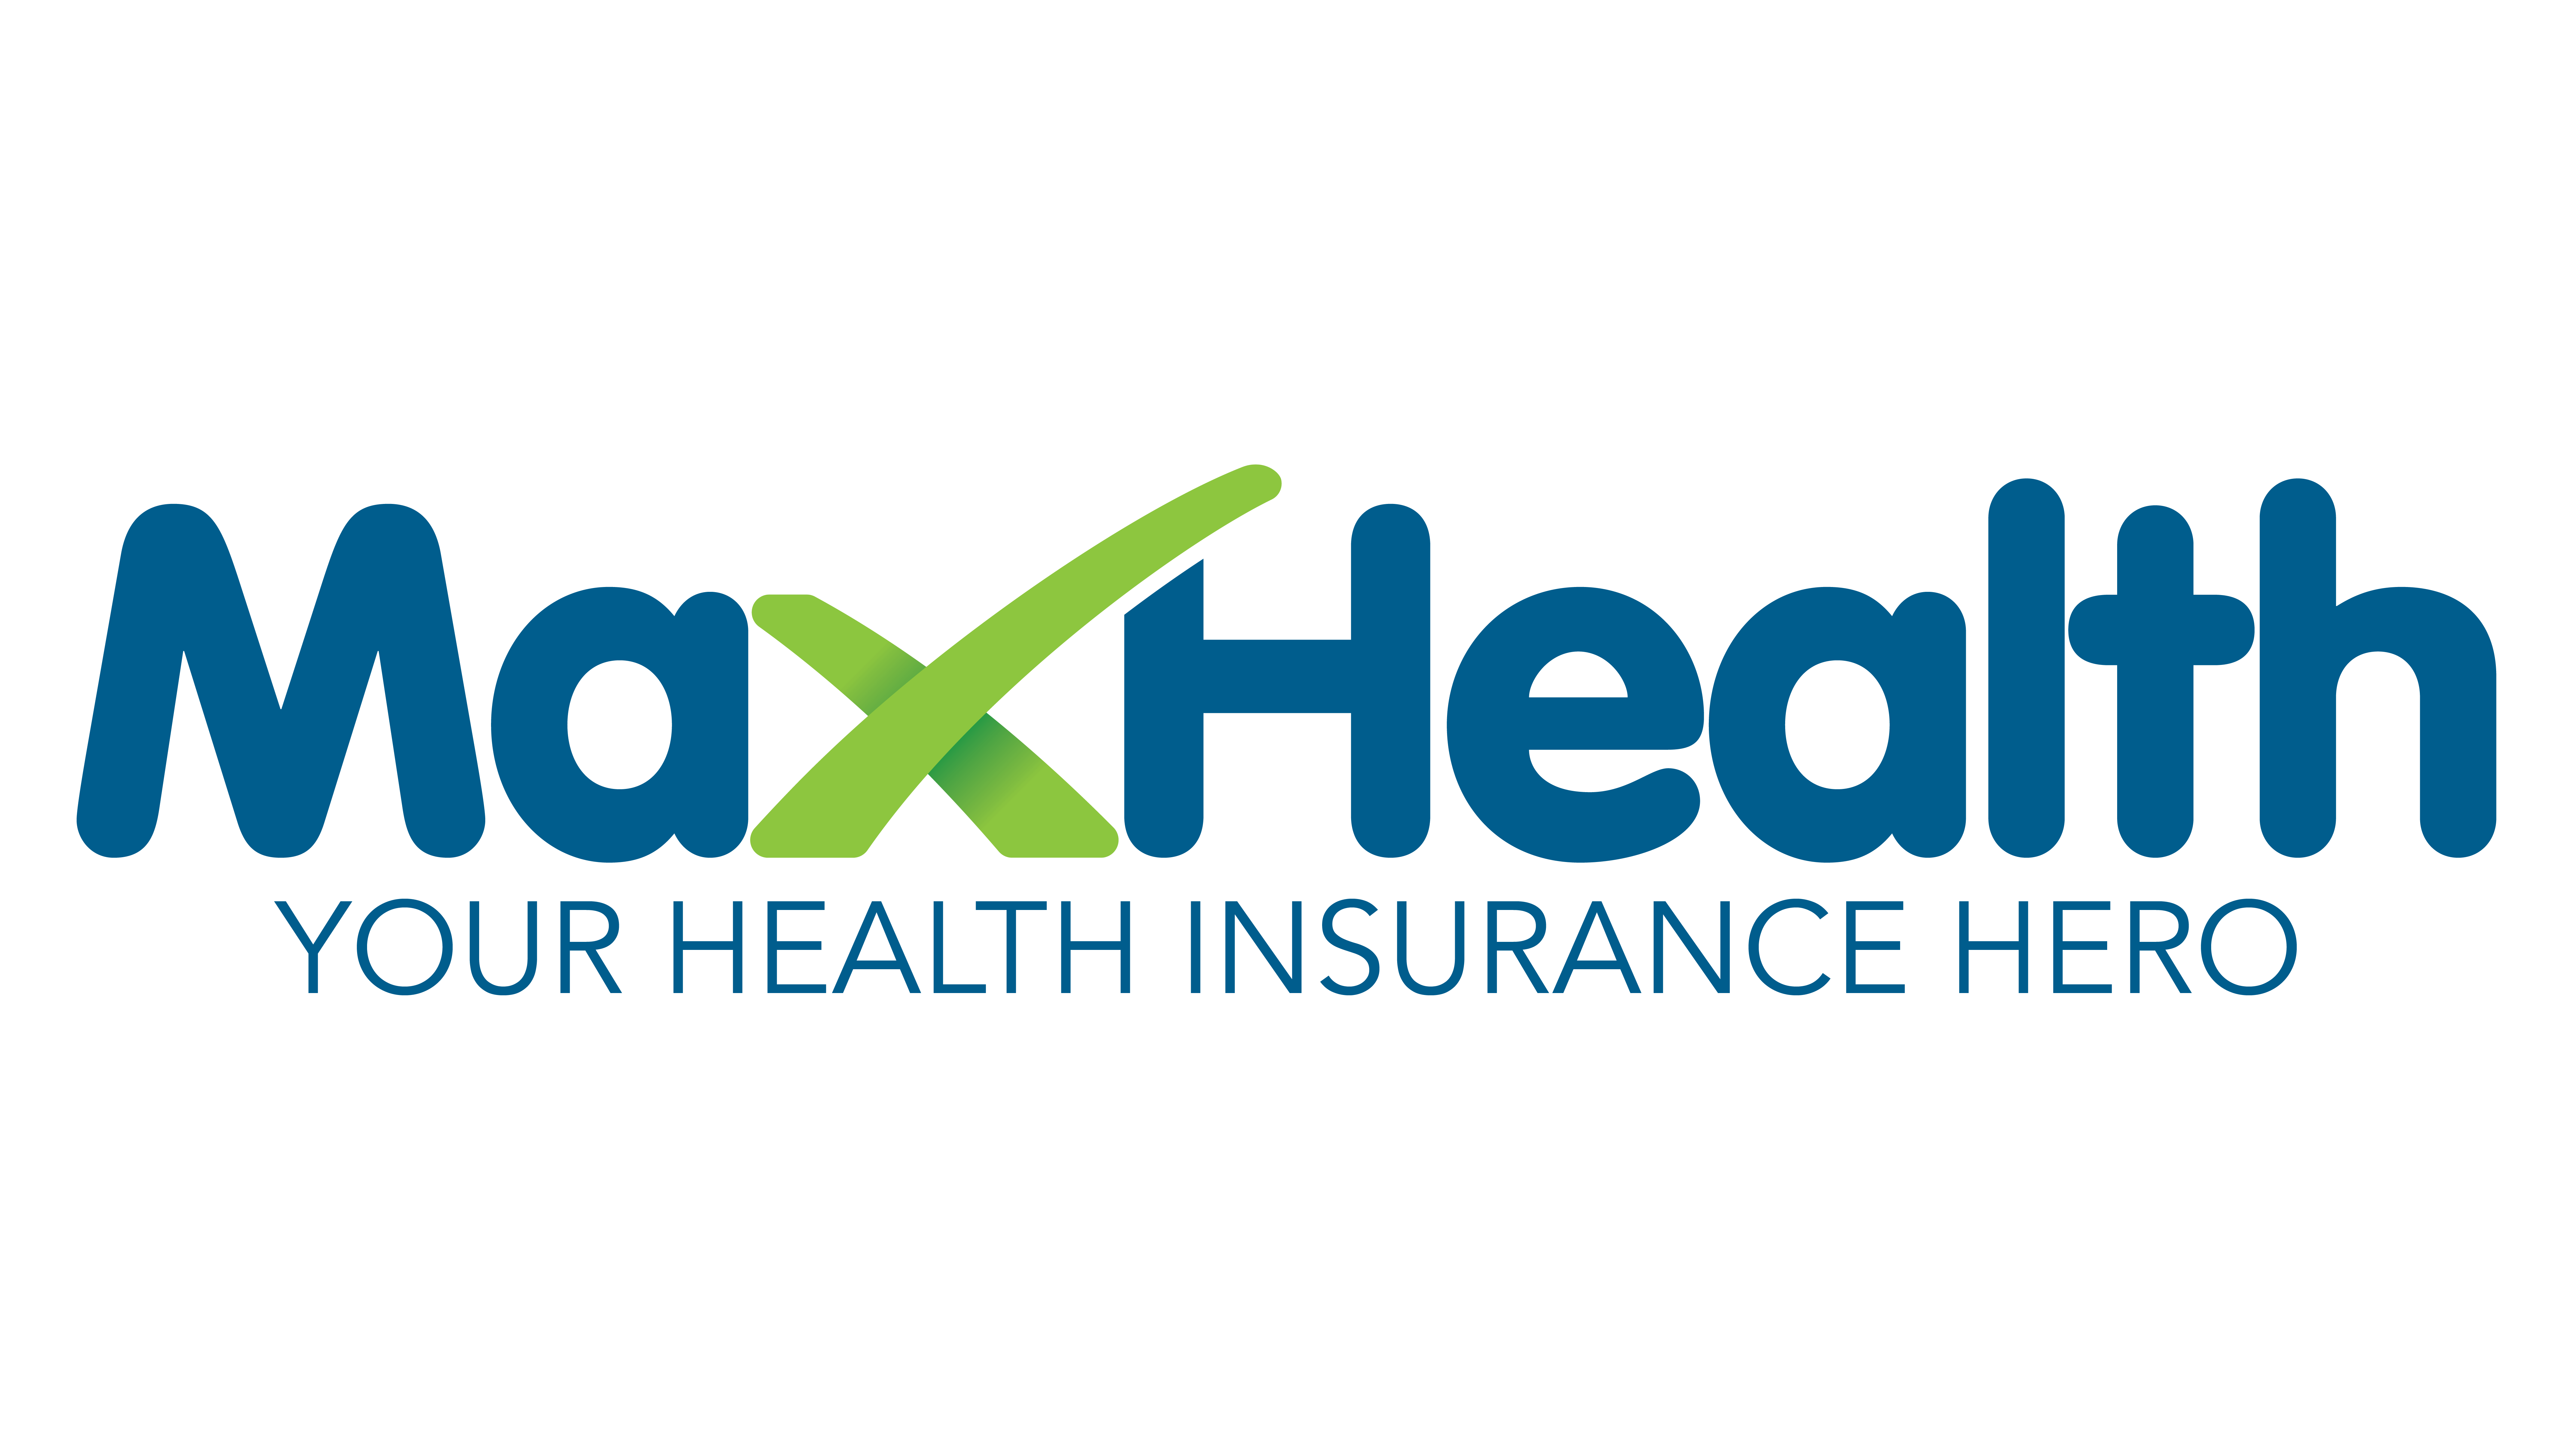 MaxHealth Health Insurance in UAE